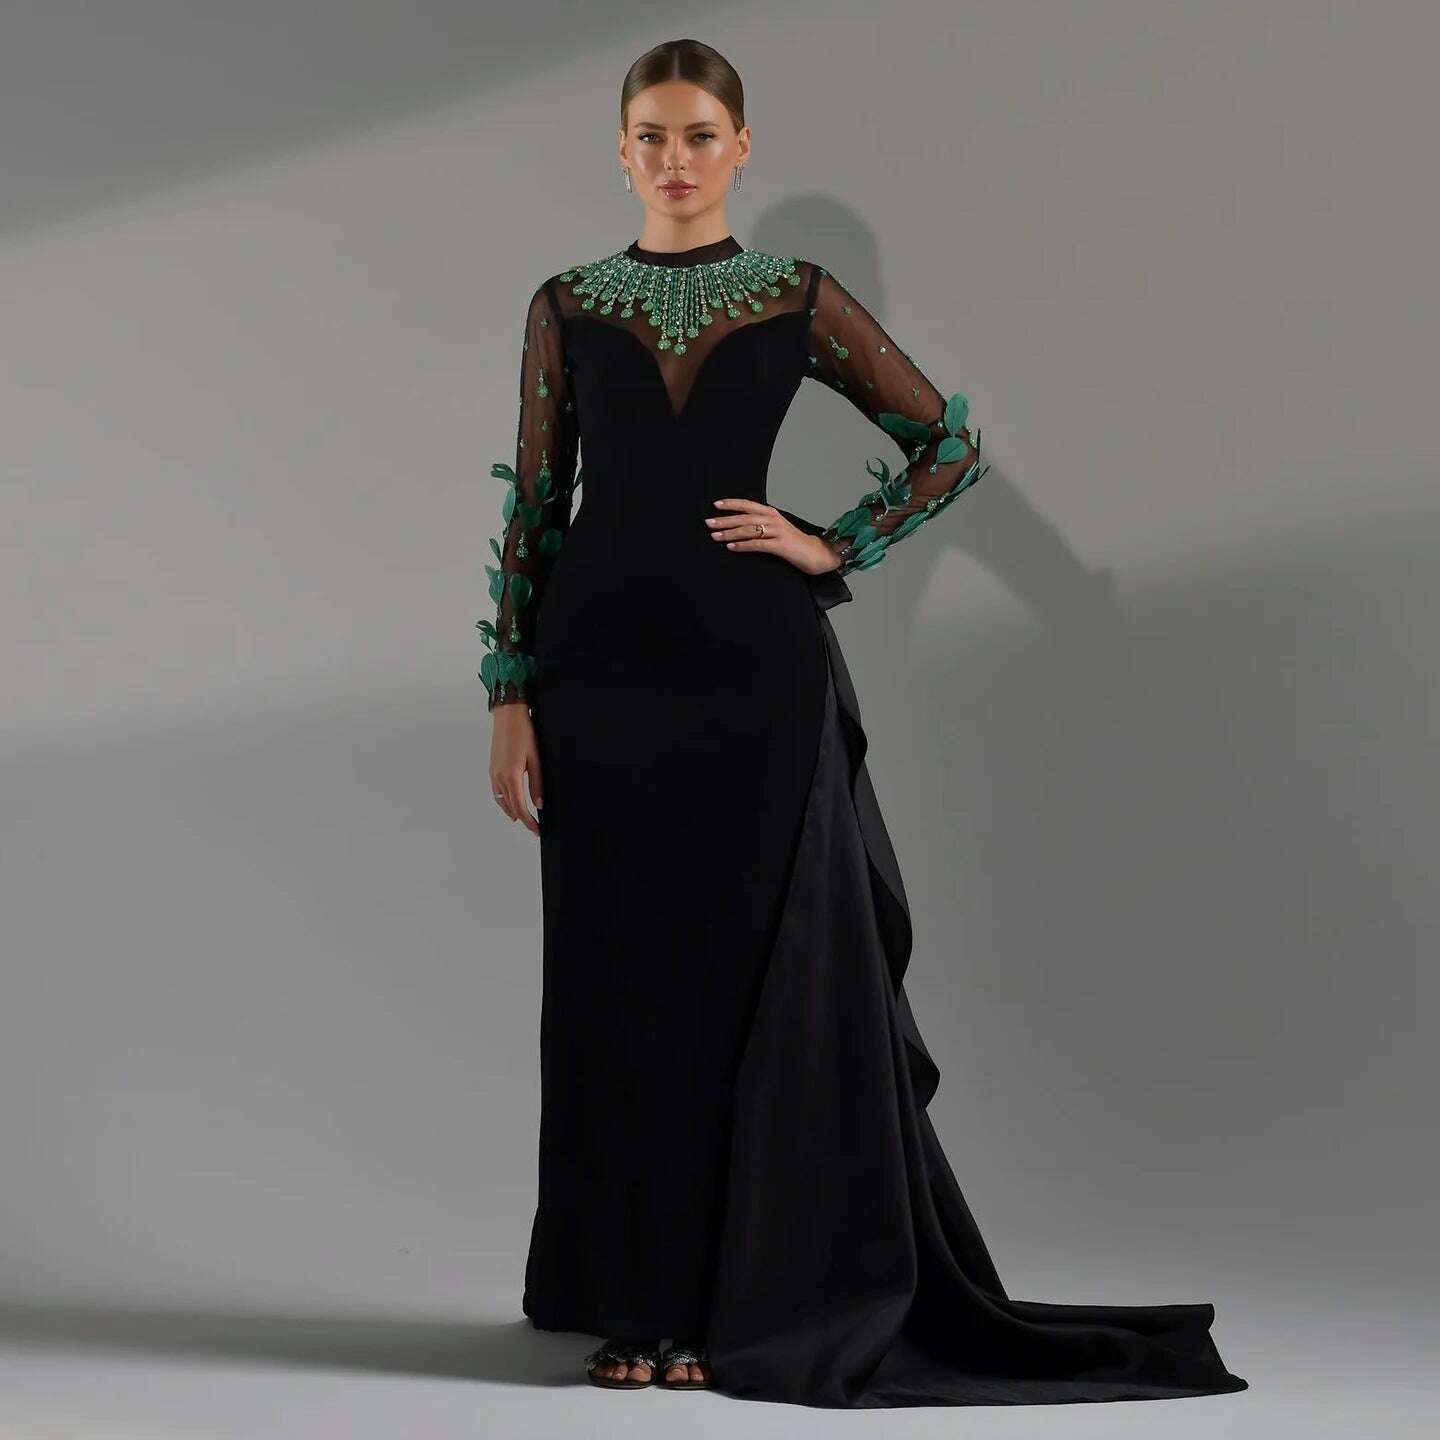 KIMLUD, Sharon Said Luxury Dubai Emerald Green Feathers Black Evening Dress Long Sleeves Saudi Arabia Women Formal Party Gowns SS457, KIMLUD Womens Clothes